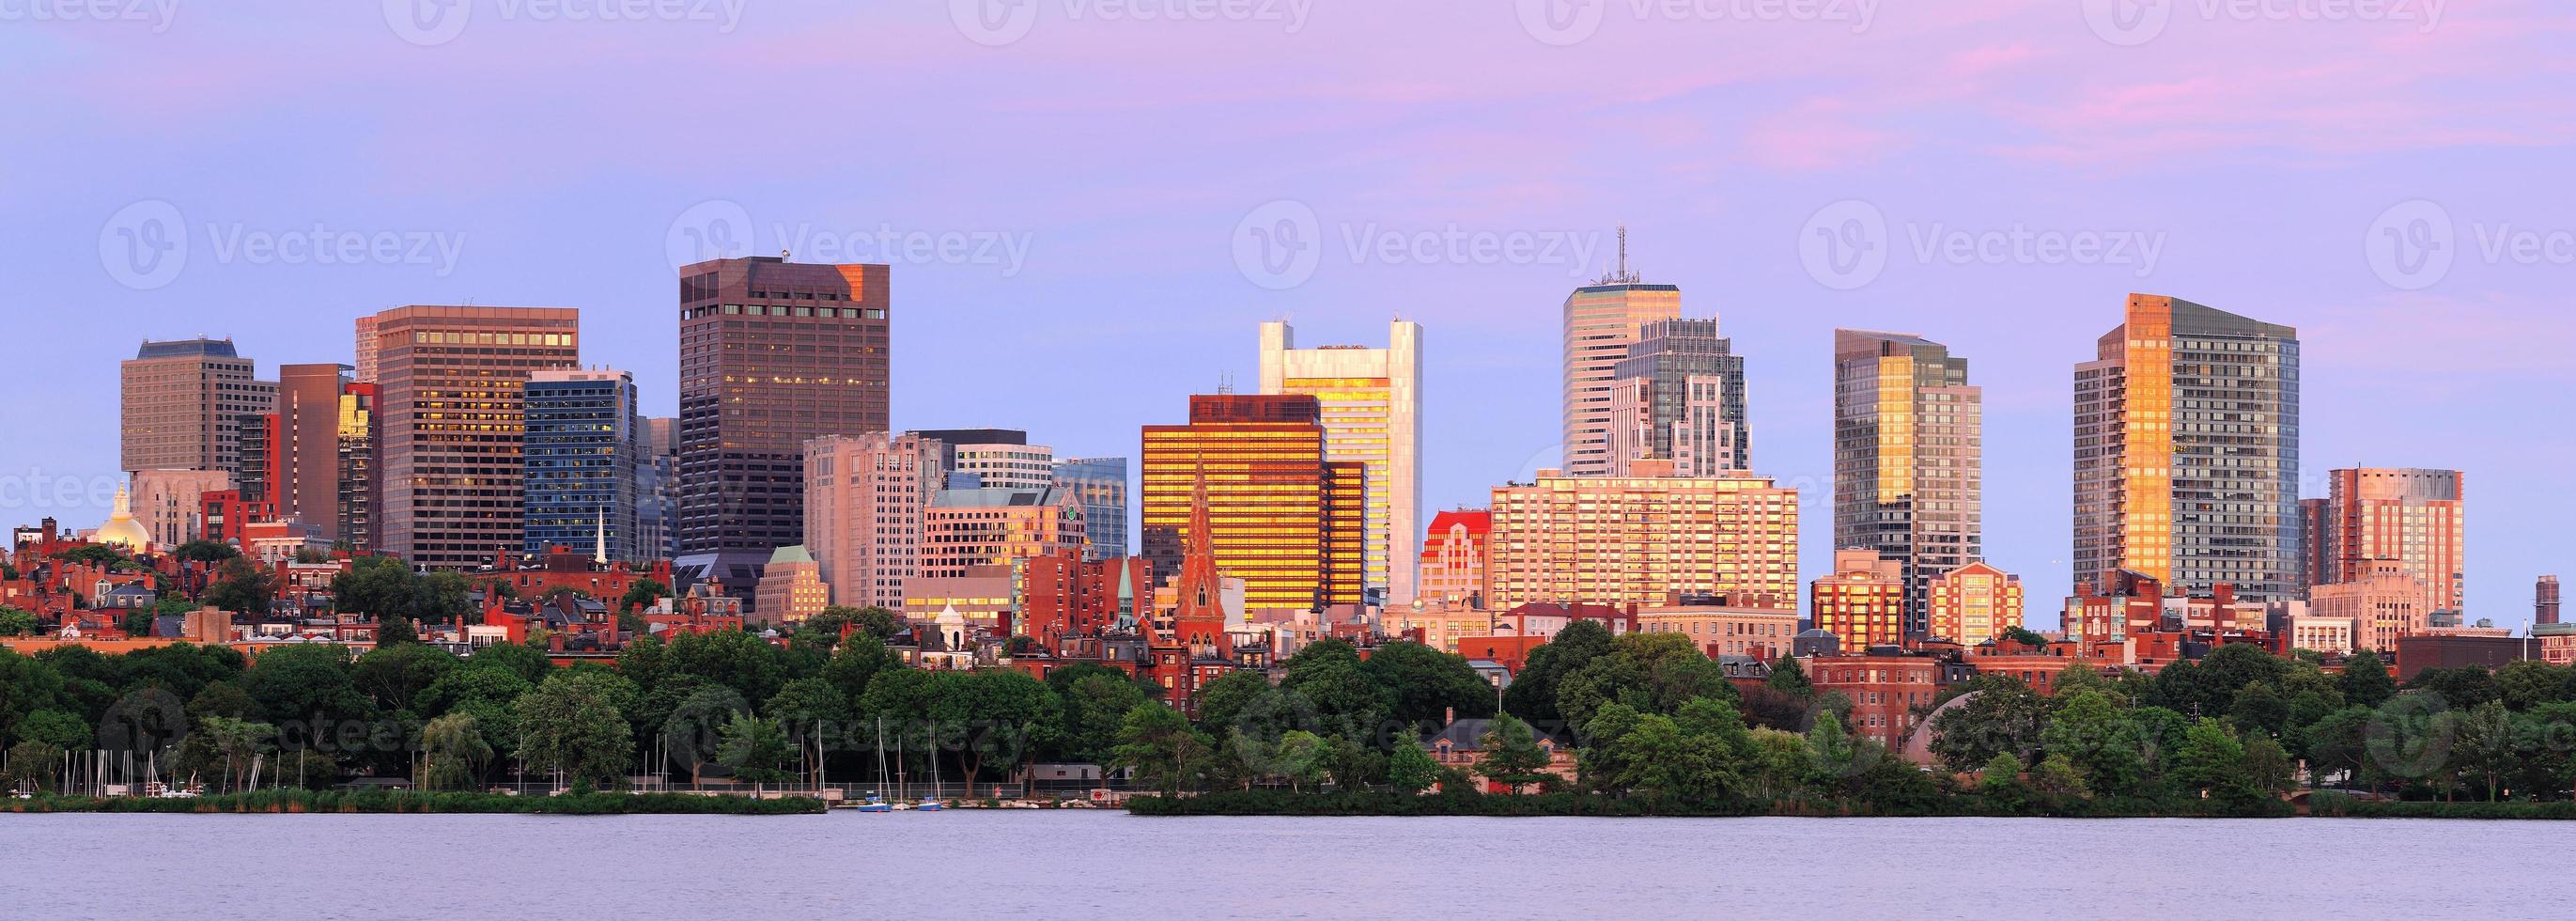 Charles River Sonnenuntergang foto